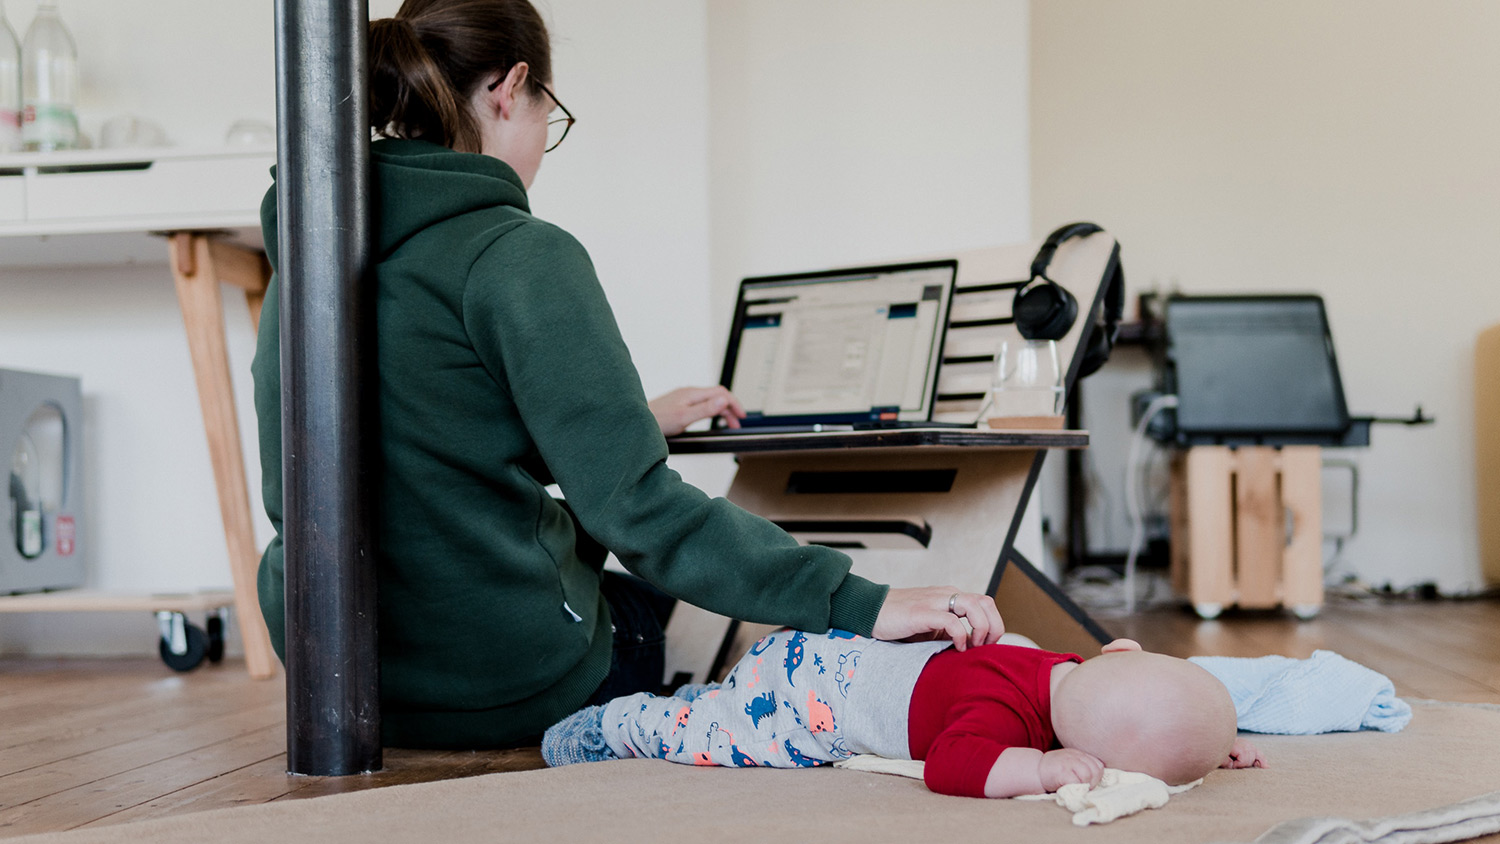 Multitasking work and childcare